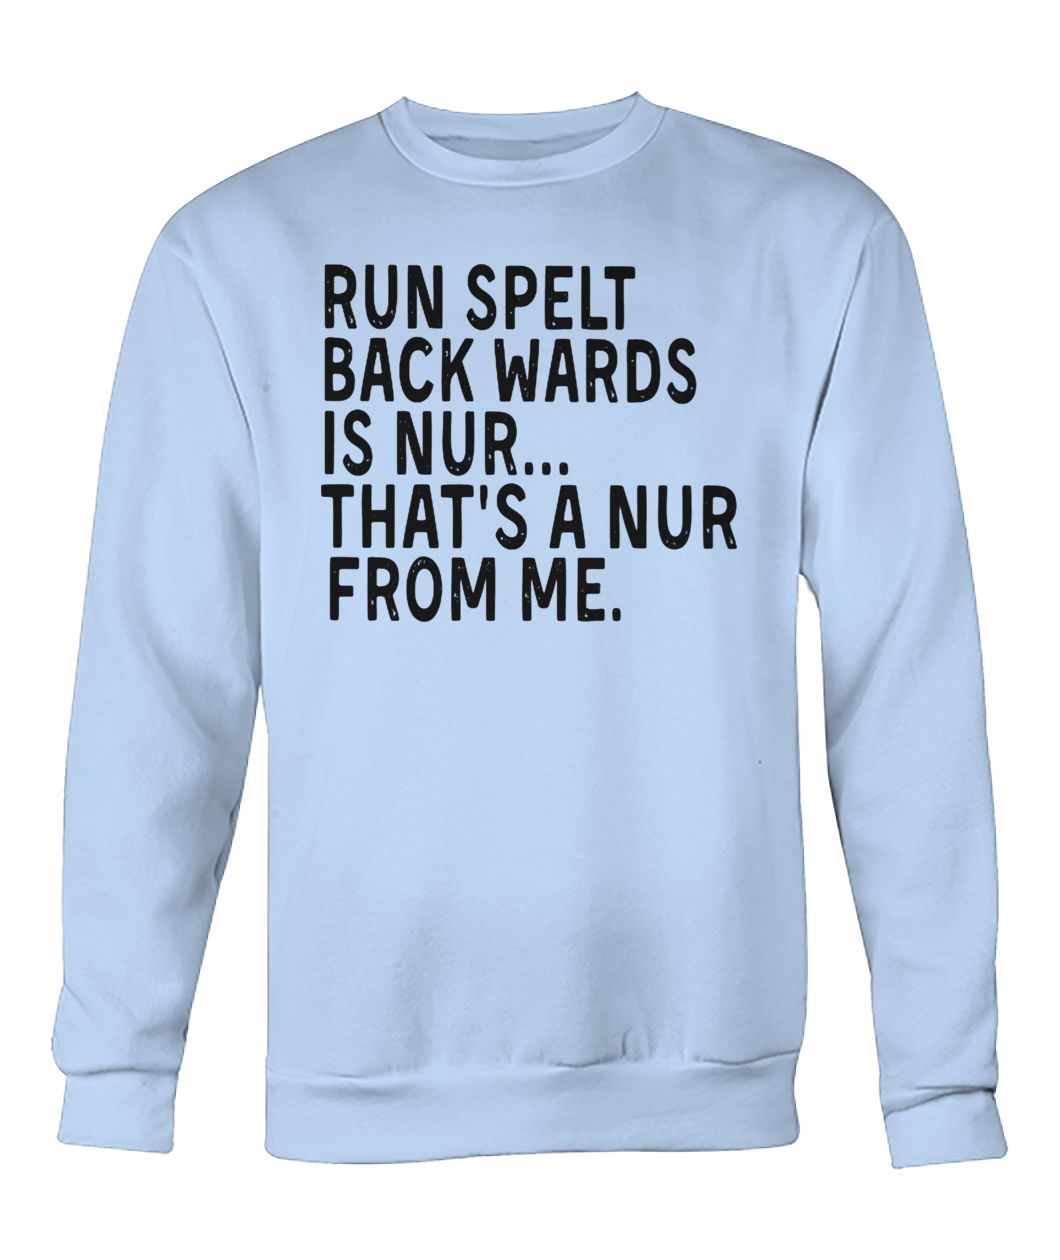 Run spelt backwards is nur that's a nur from me crew neck sweatshirt